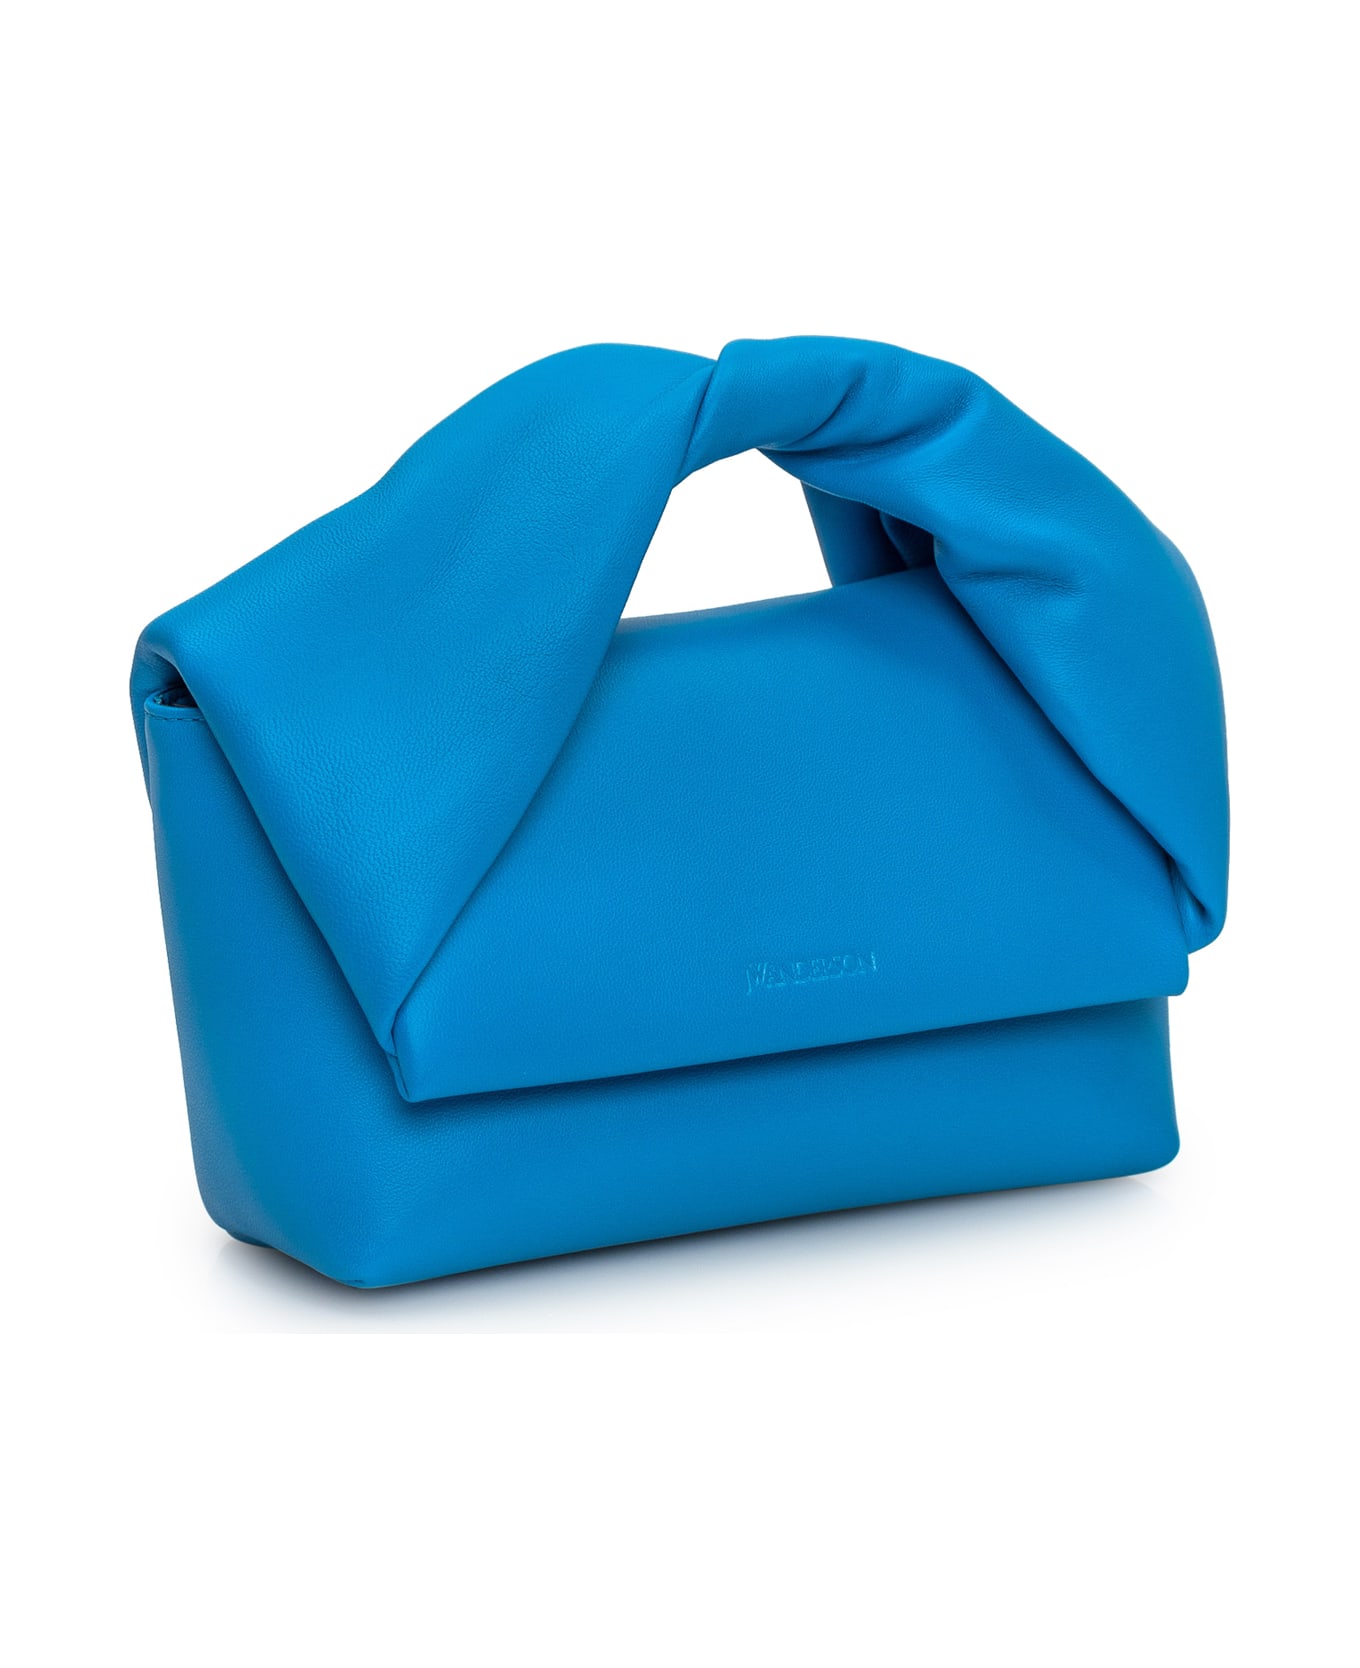 J.W. Anderson Midi Twister Bag - Turquoise ショルダーバッグ